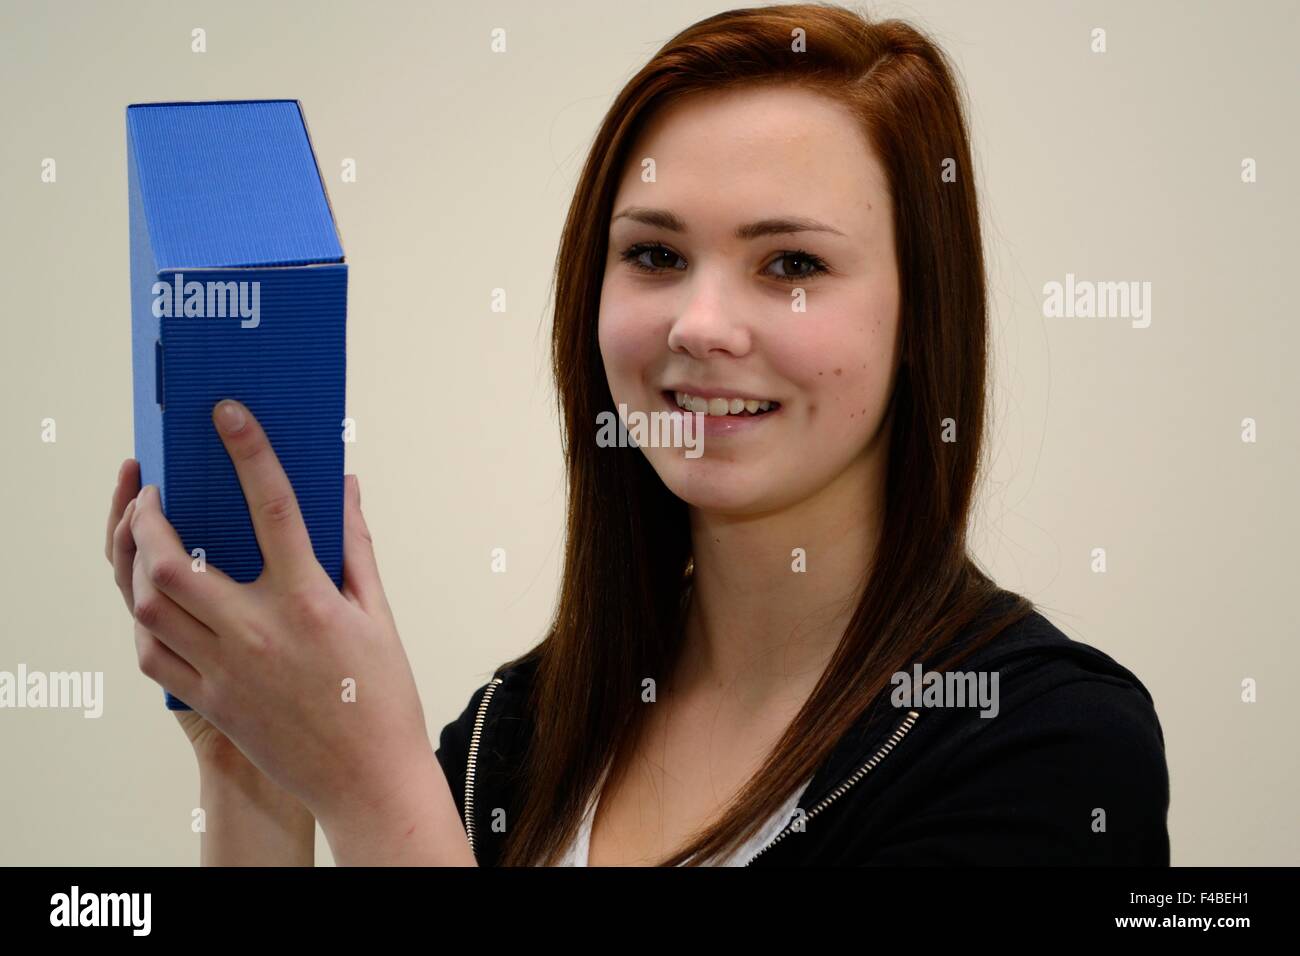 Teenager shakes blue gift box Stock Photo